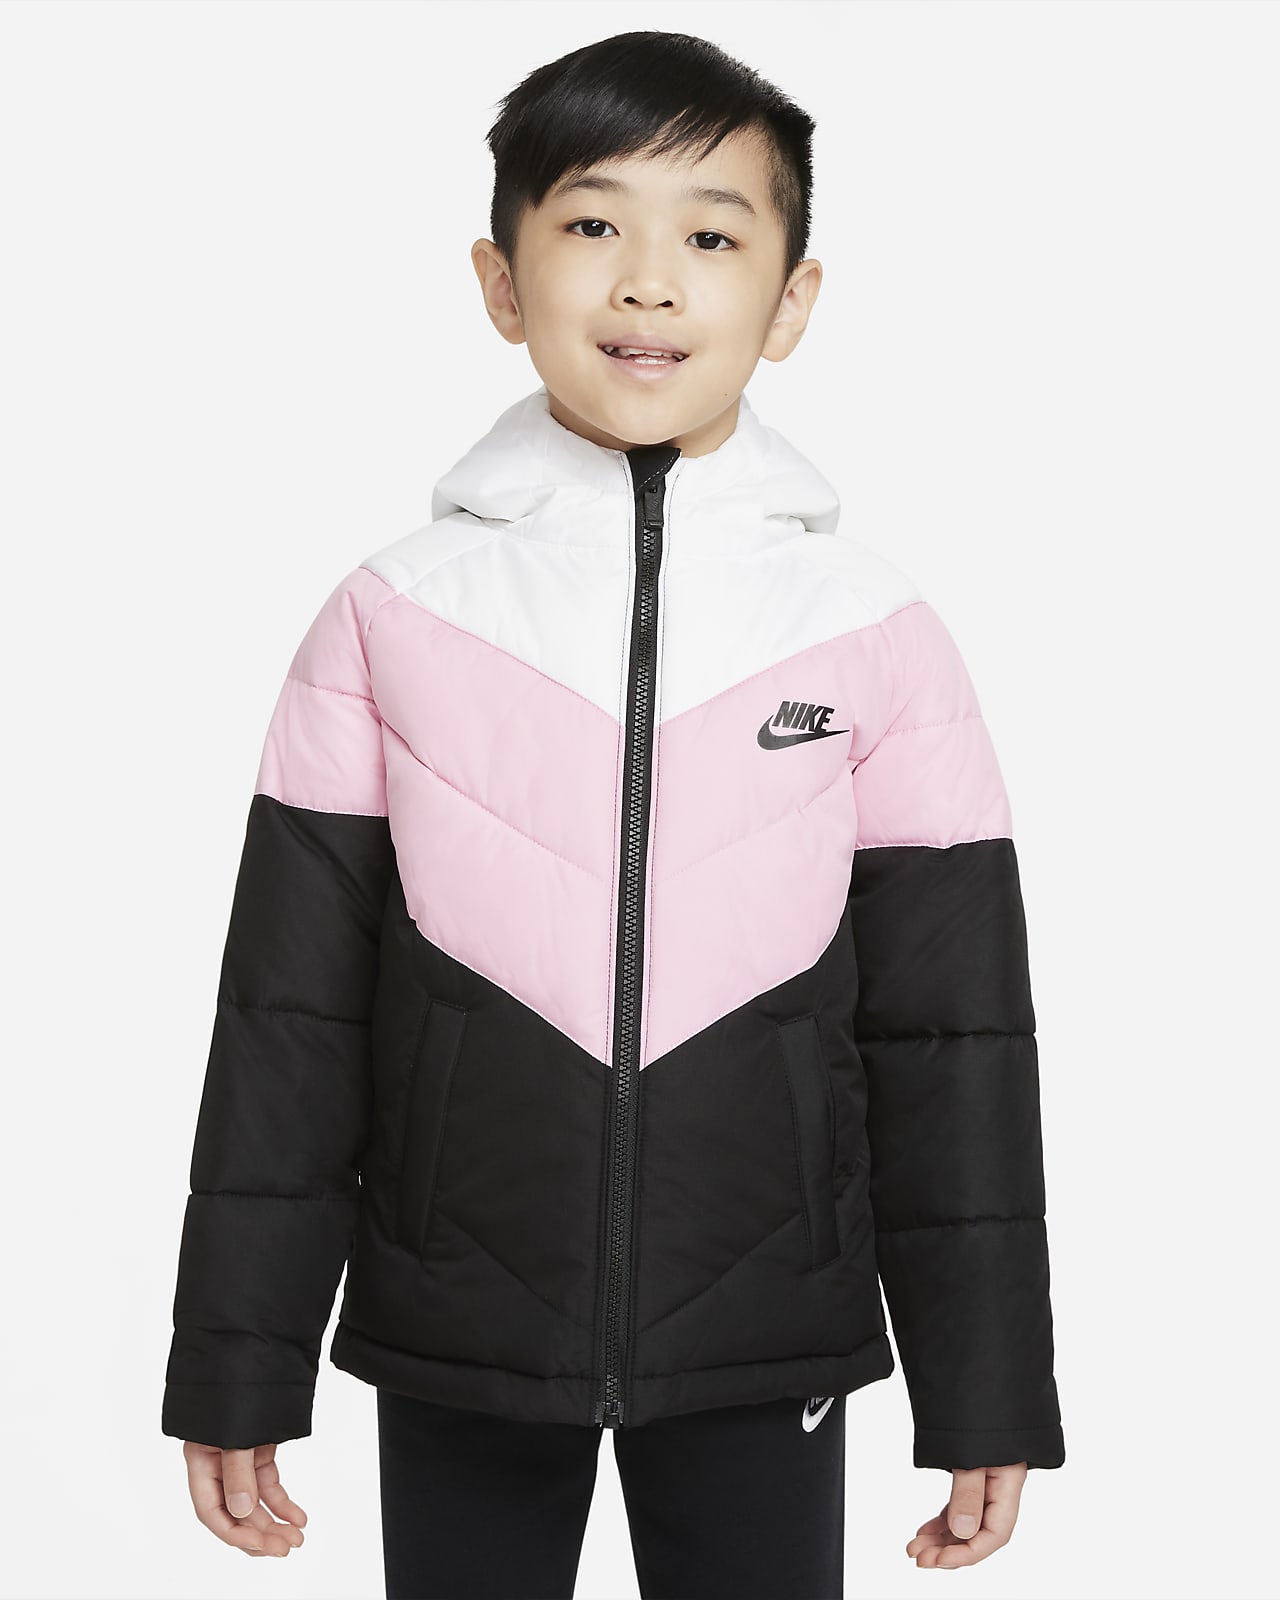 Nike Sportswear acolchada - Niño/a pequeño/a. Nike